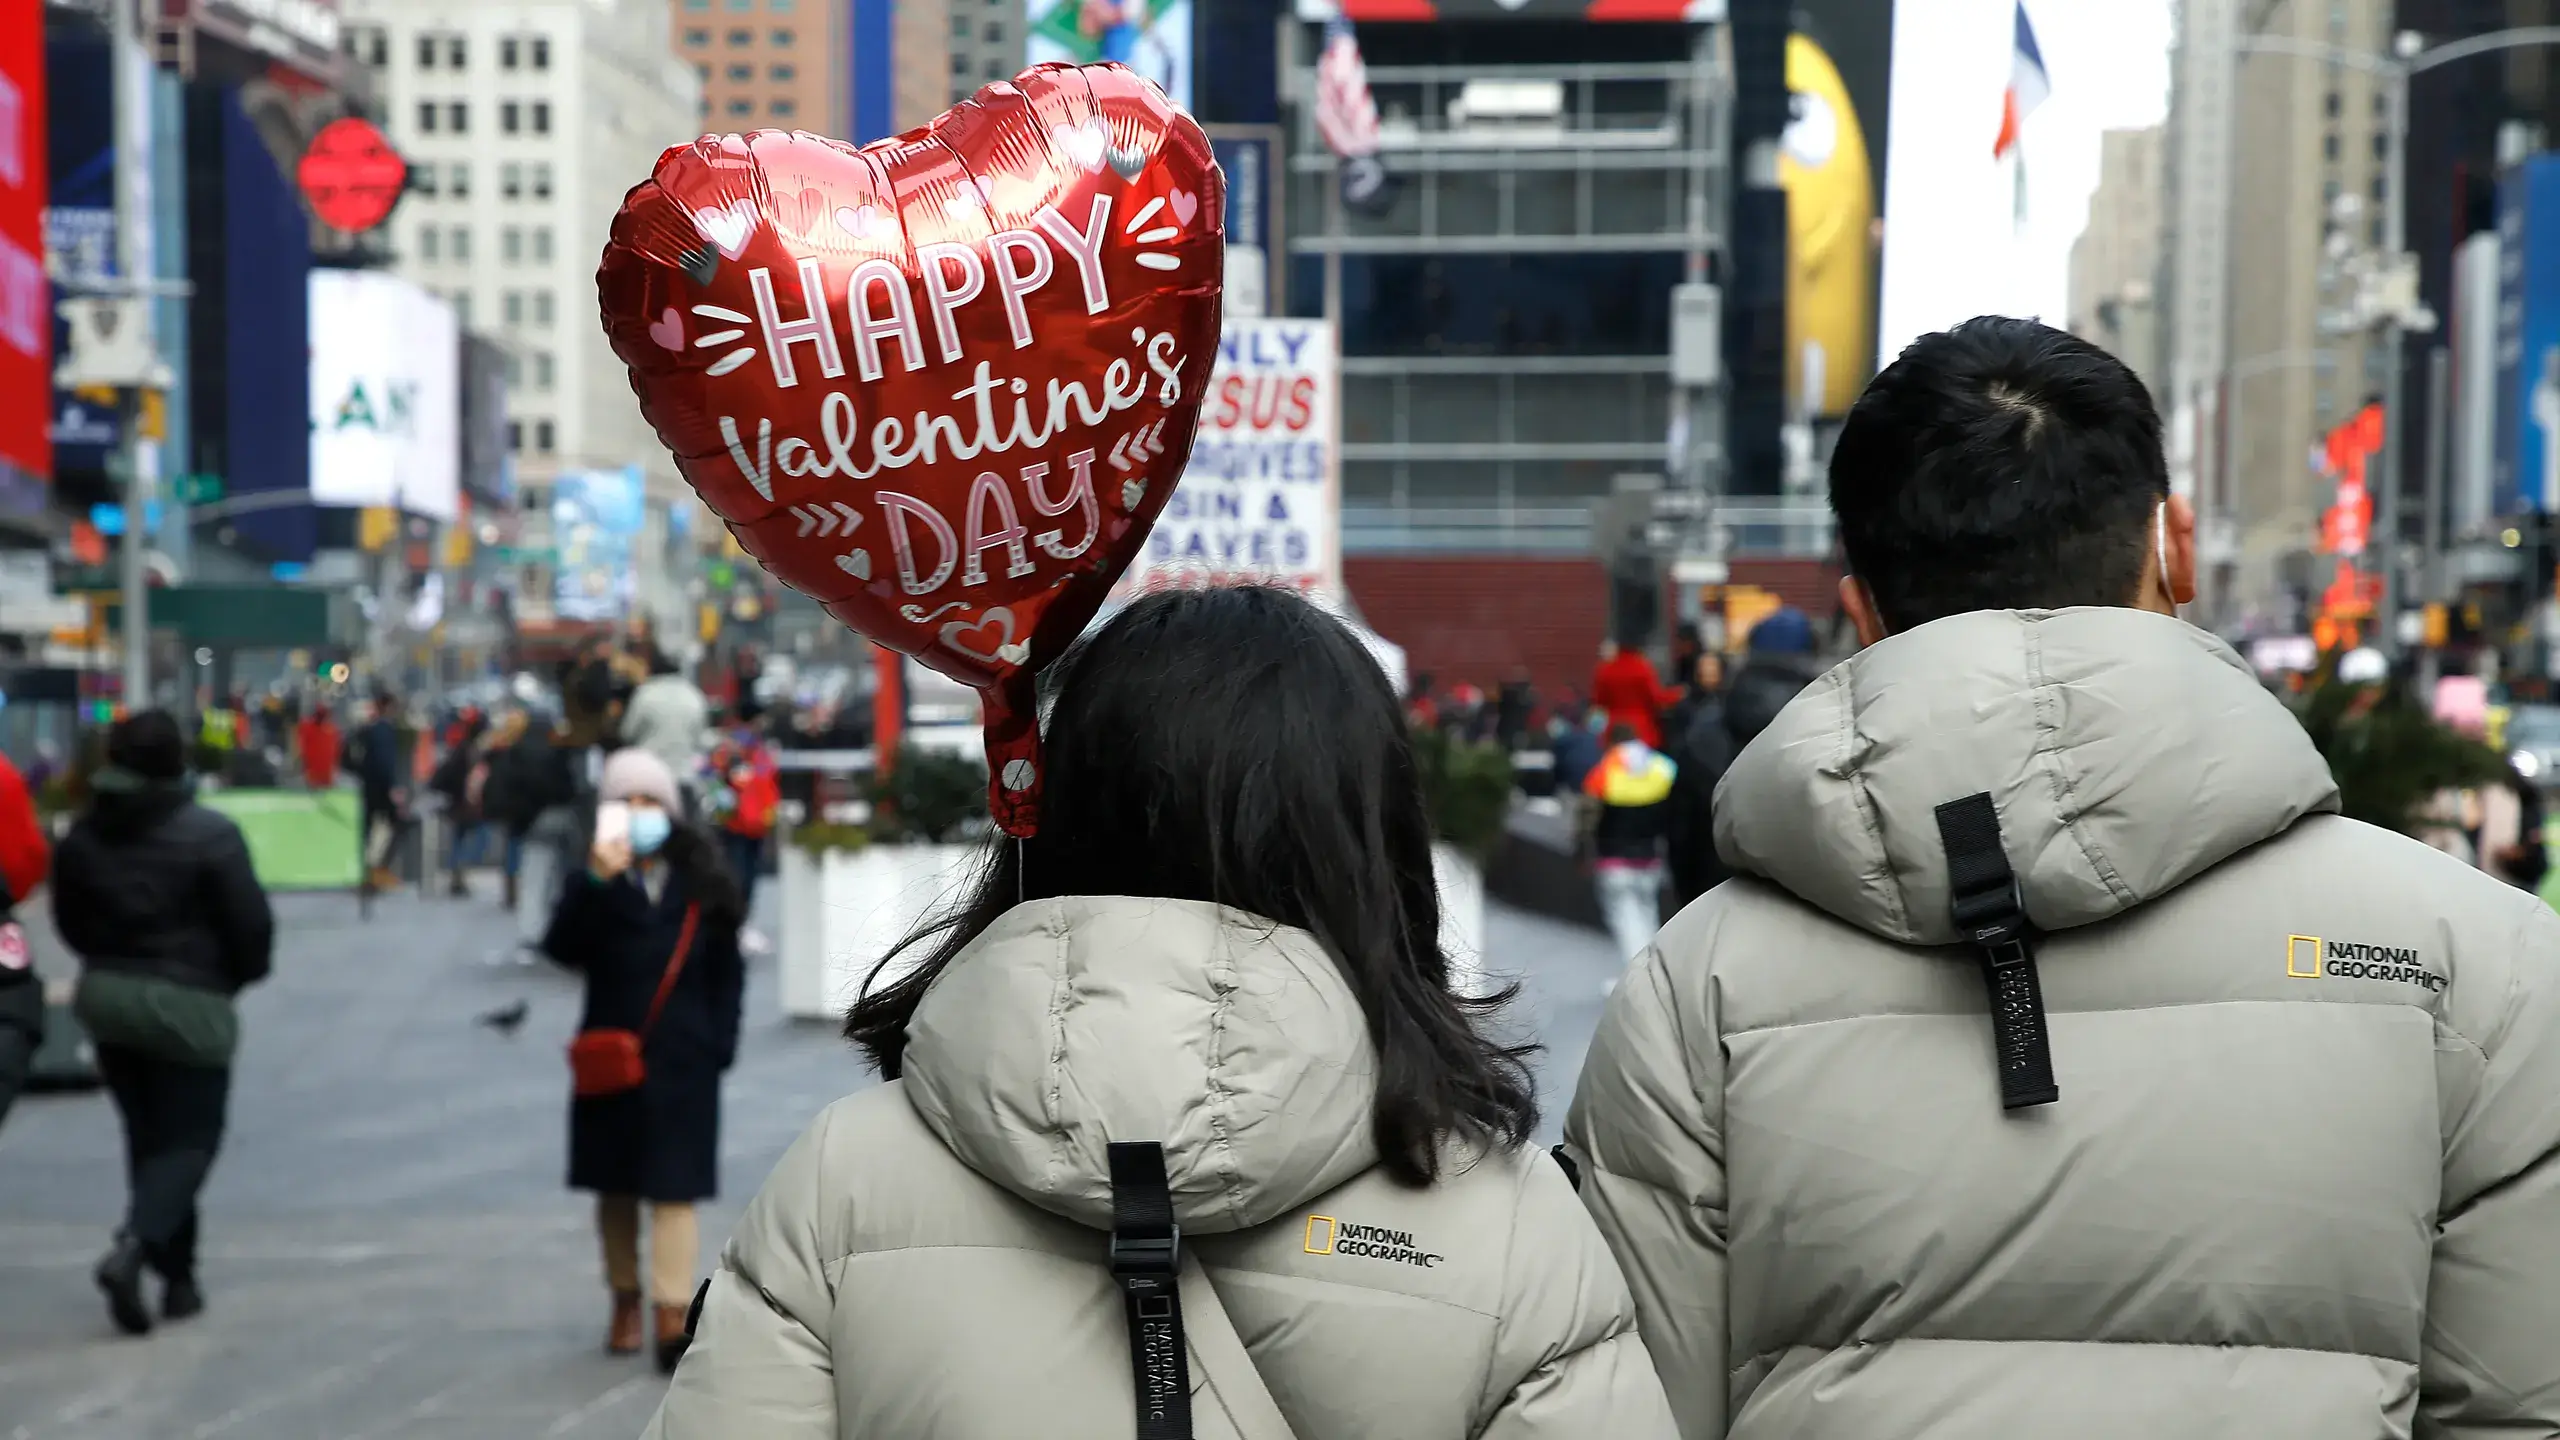 Why do we celebrate Valentine's day